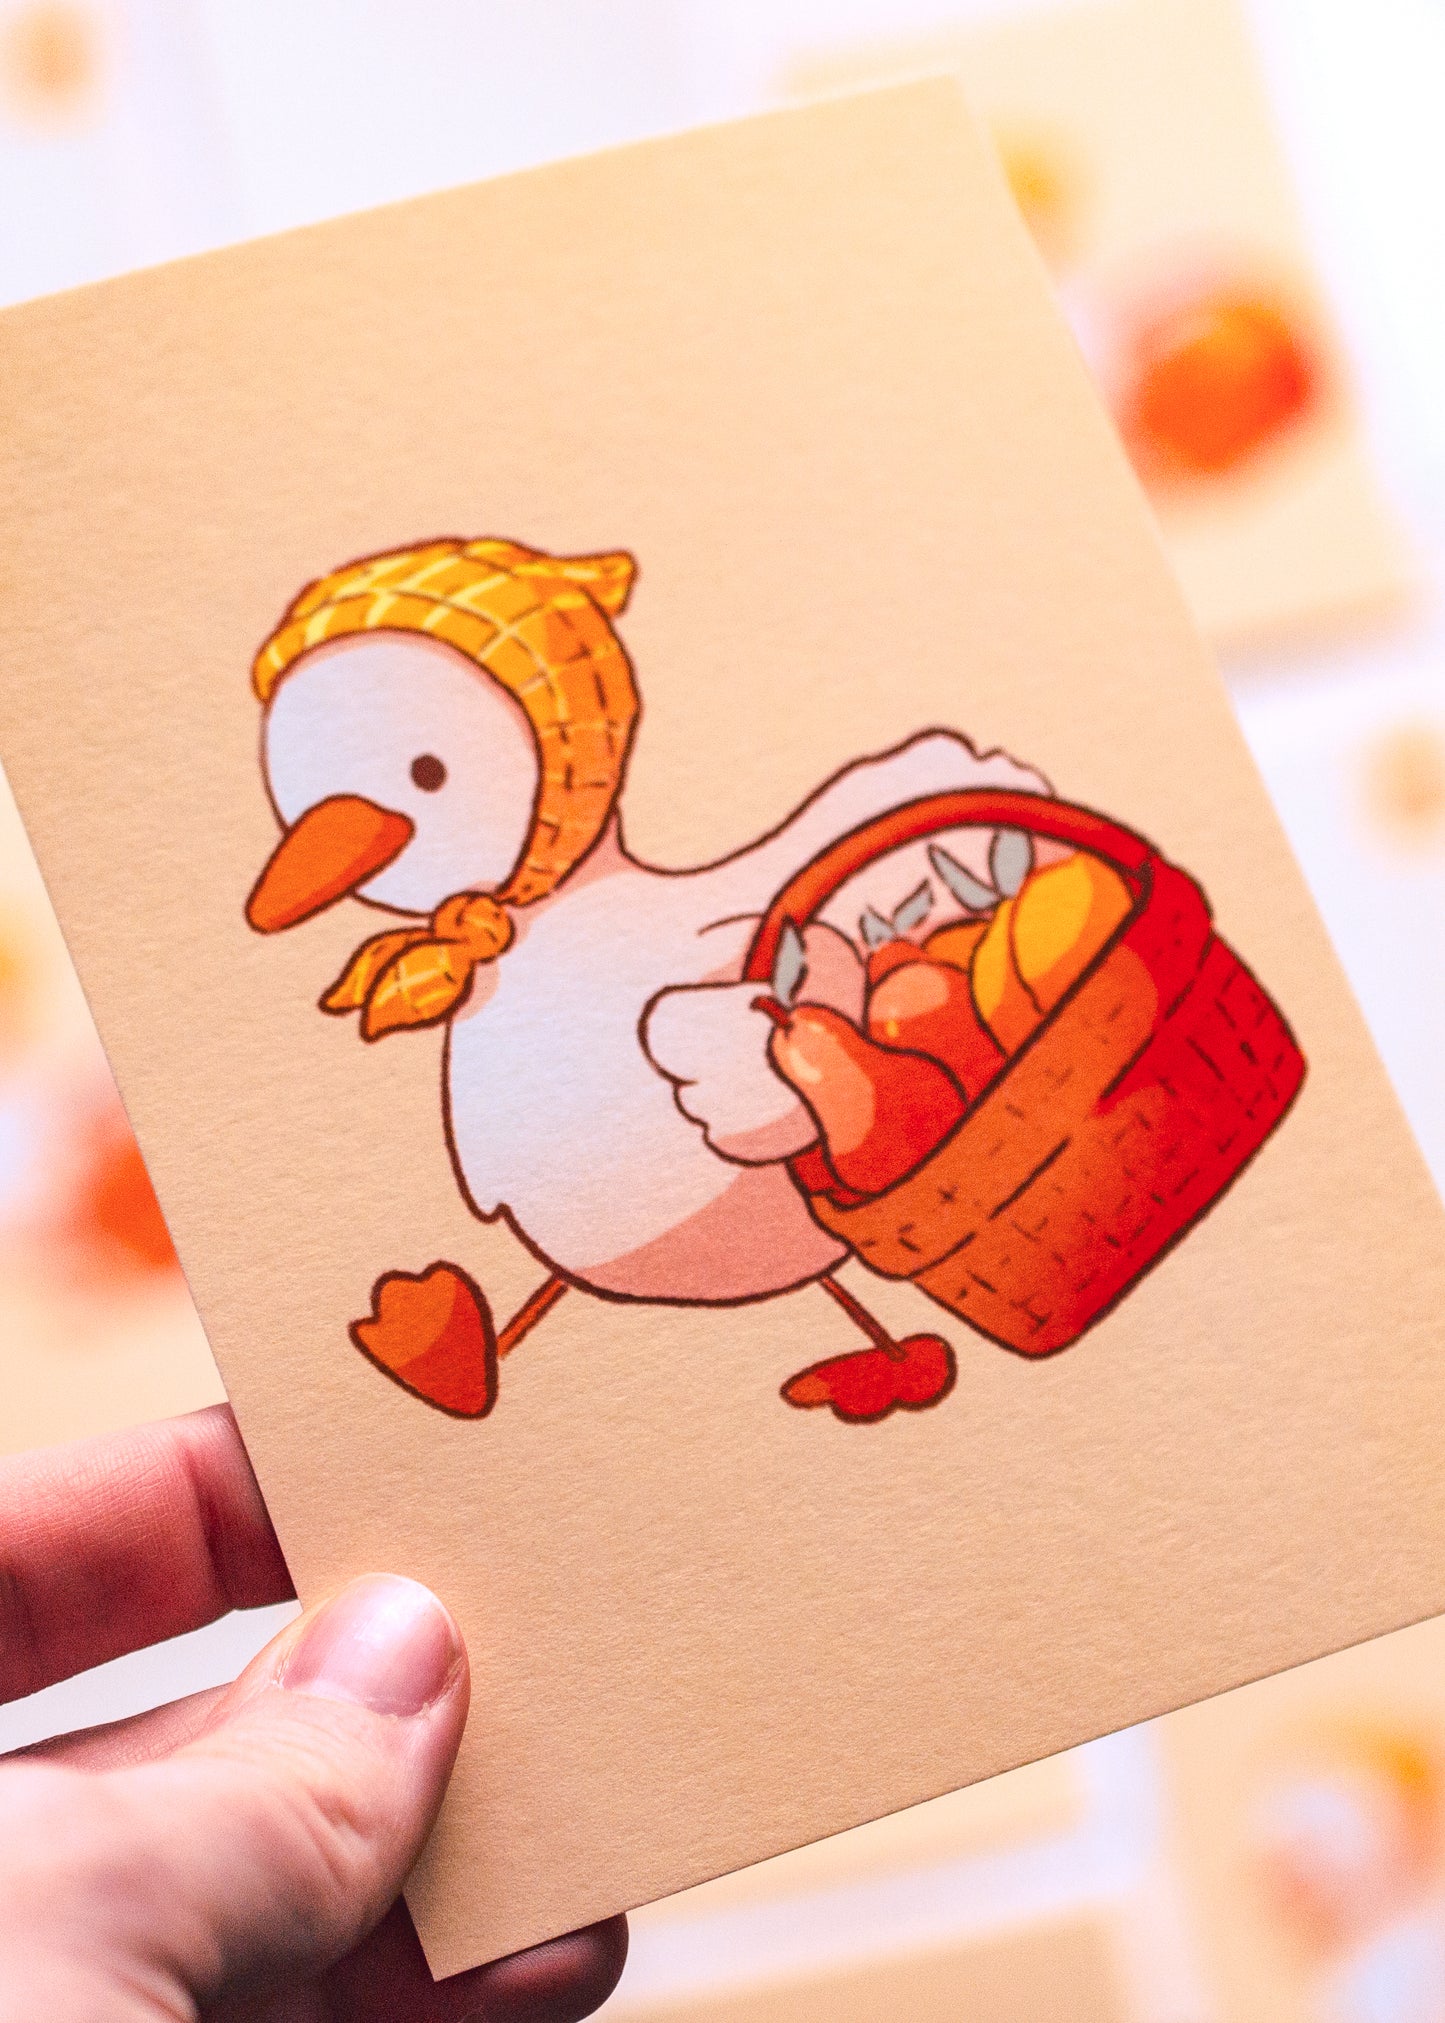 Mini prints - Duck doing his shopping